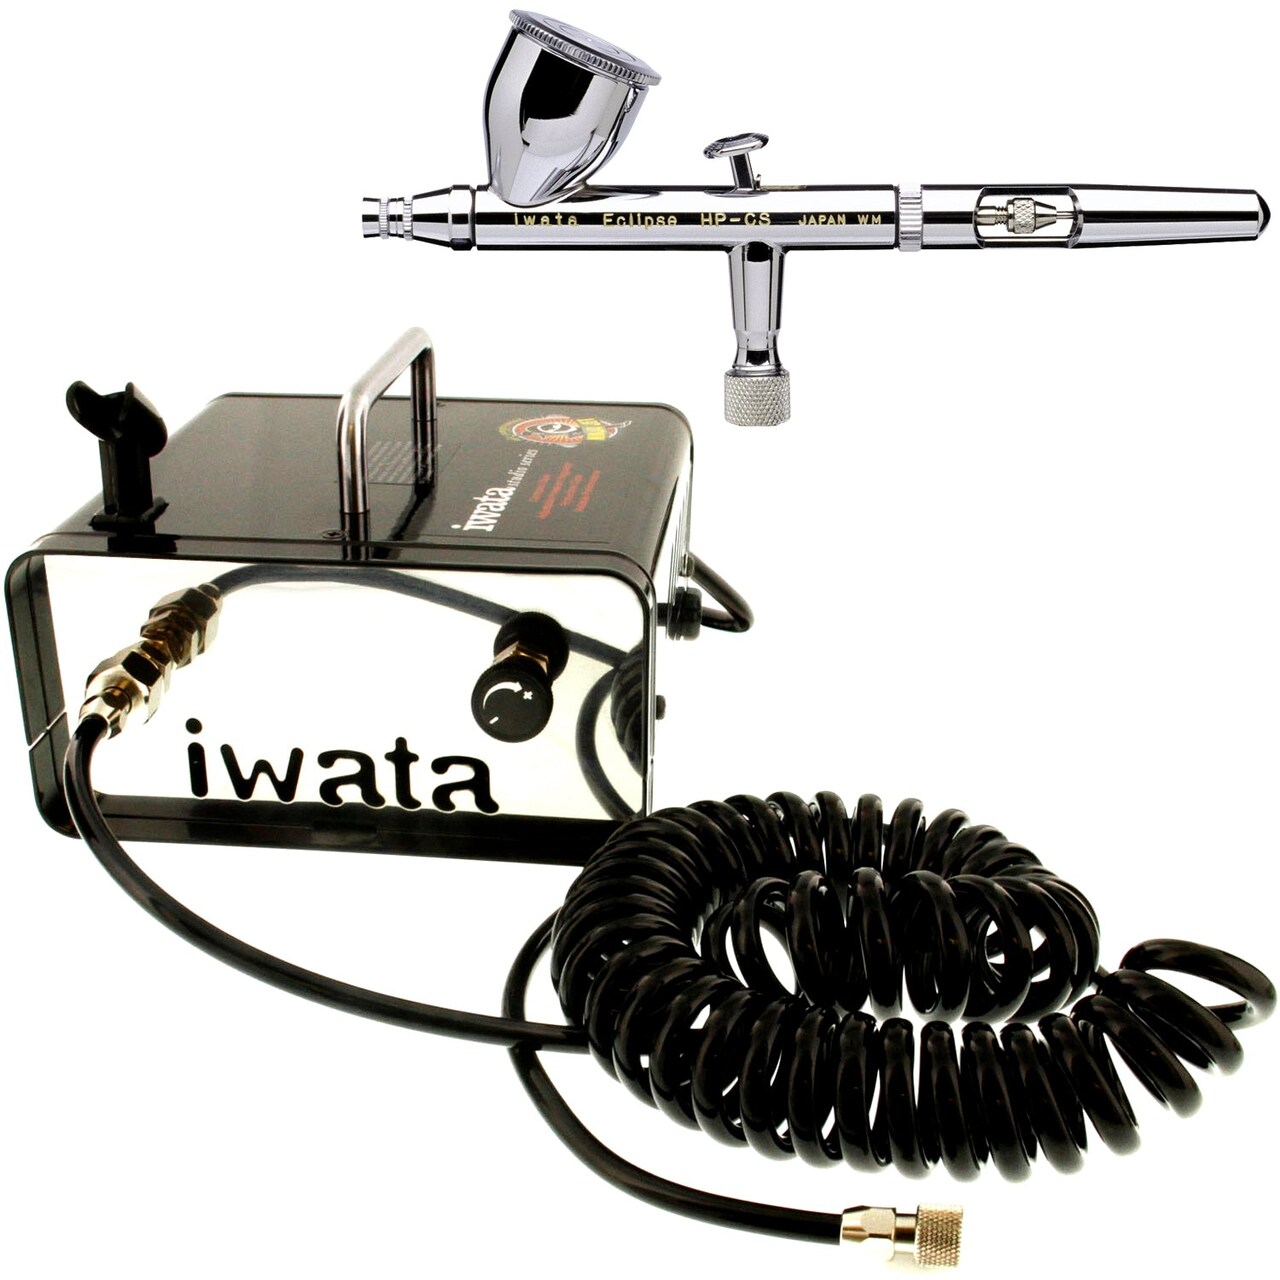 Iwata Eclipse HP-CS 4207 Airbrush Kit with Iwata Ninja Jet